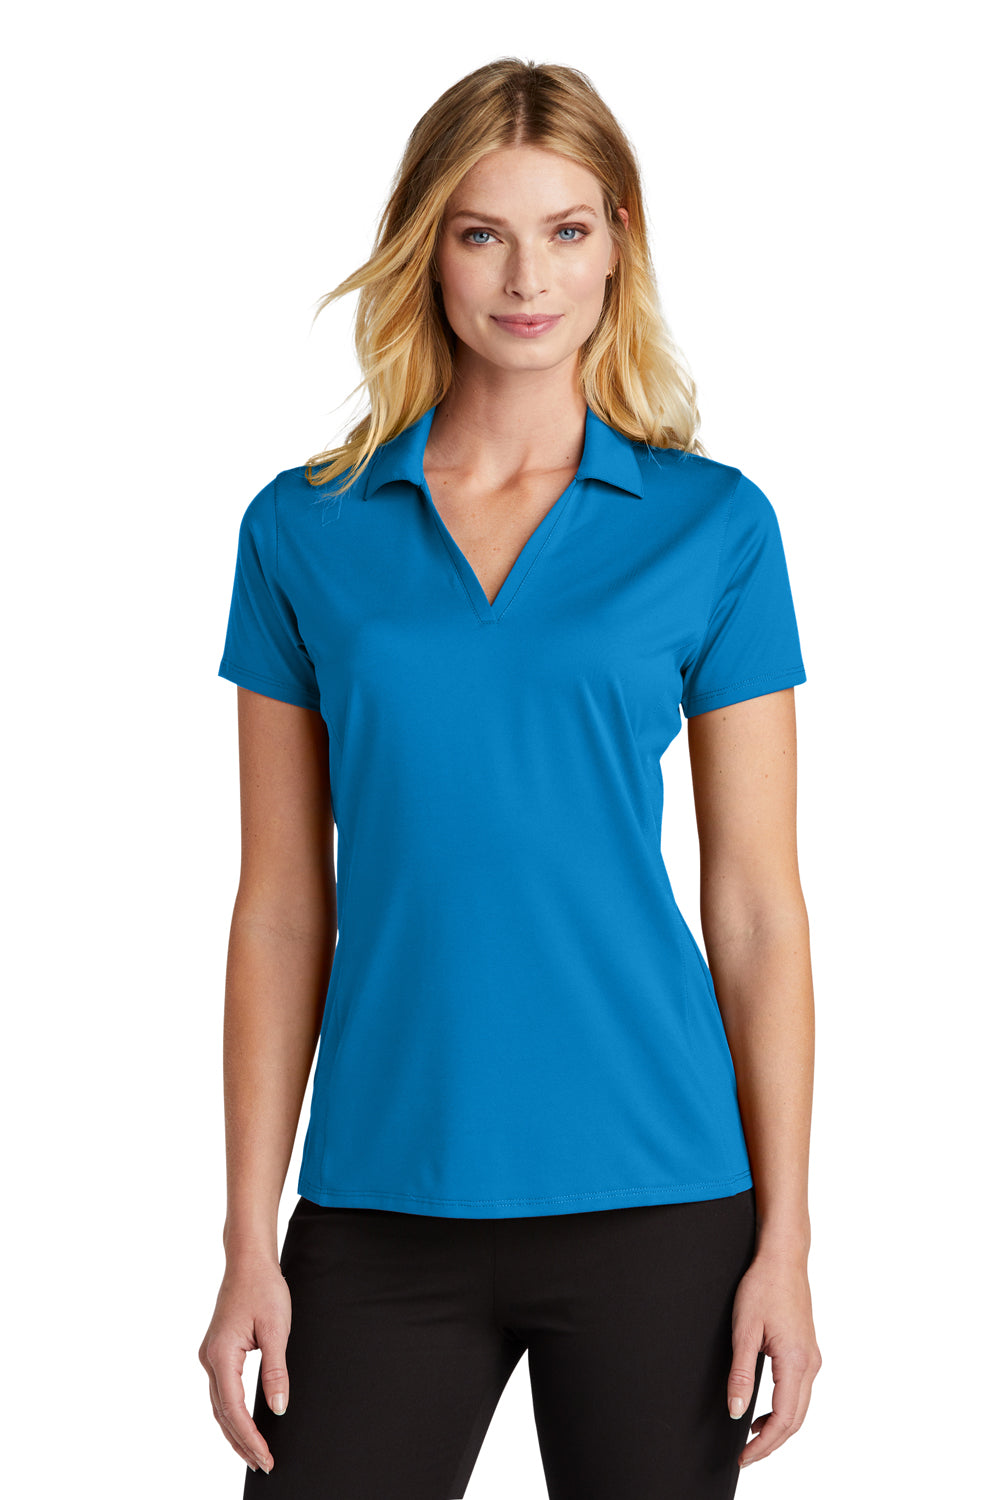 Port Authority LK398 Performance Staff Short Sleeve Polo Shirt Brilliant Blue Front